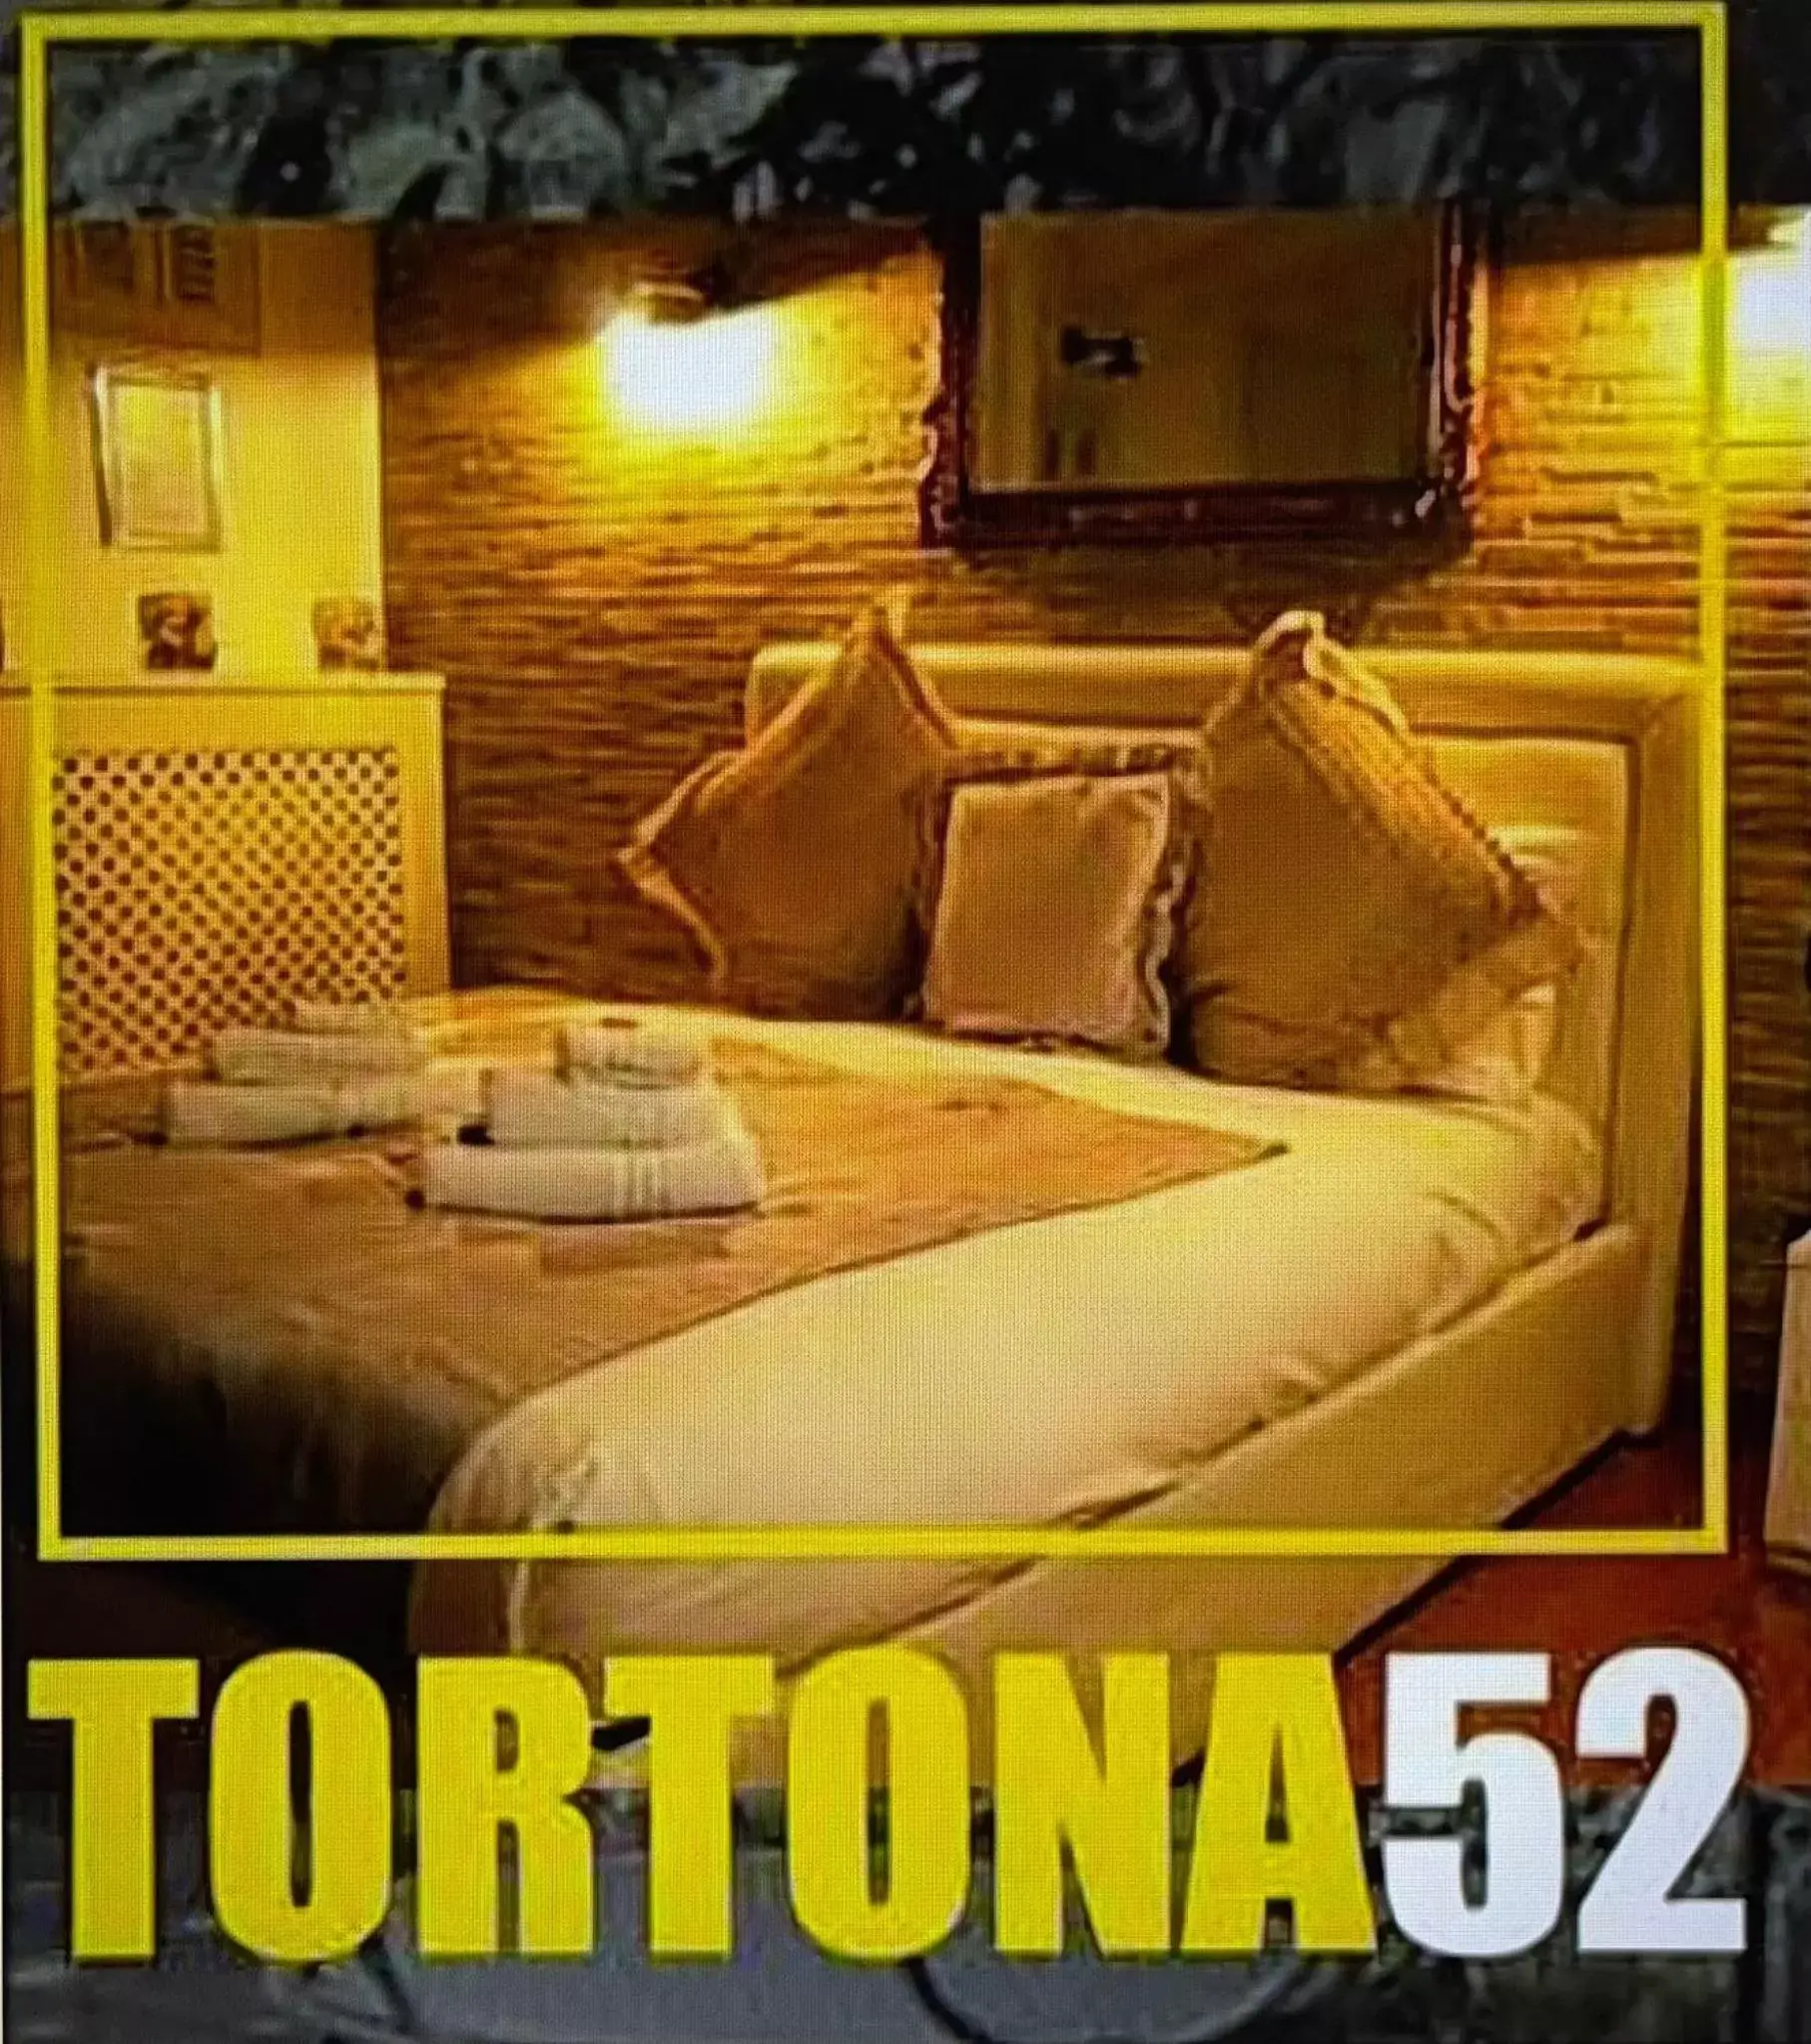 Property logo or sign in Tortona52